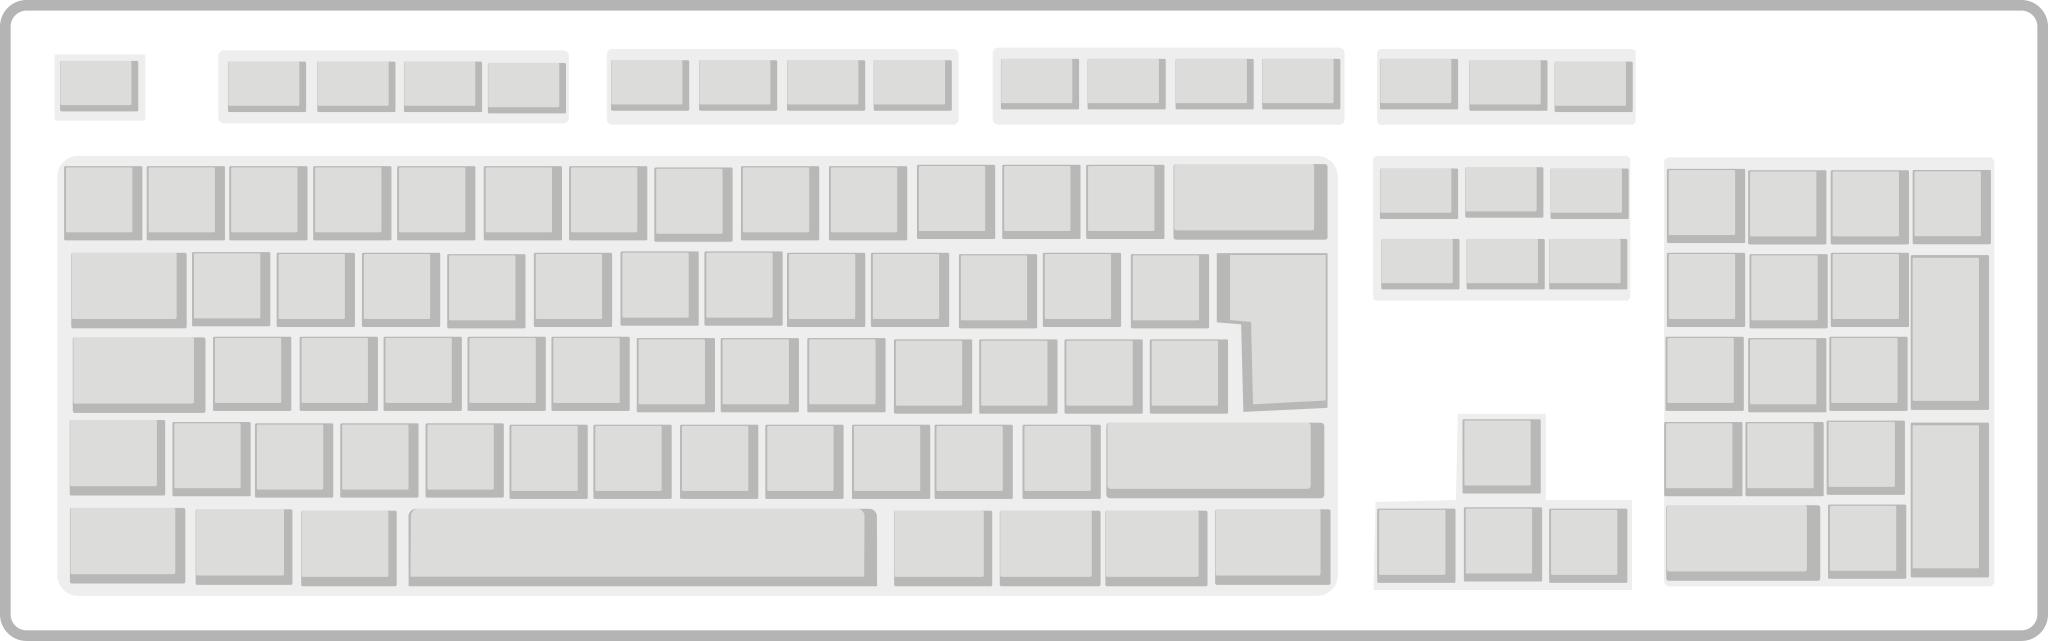 Раскладка клавиатуры без букв